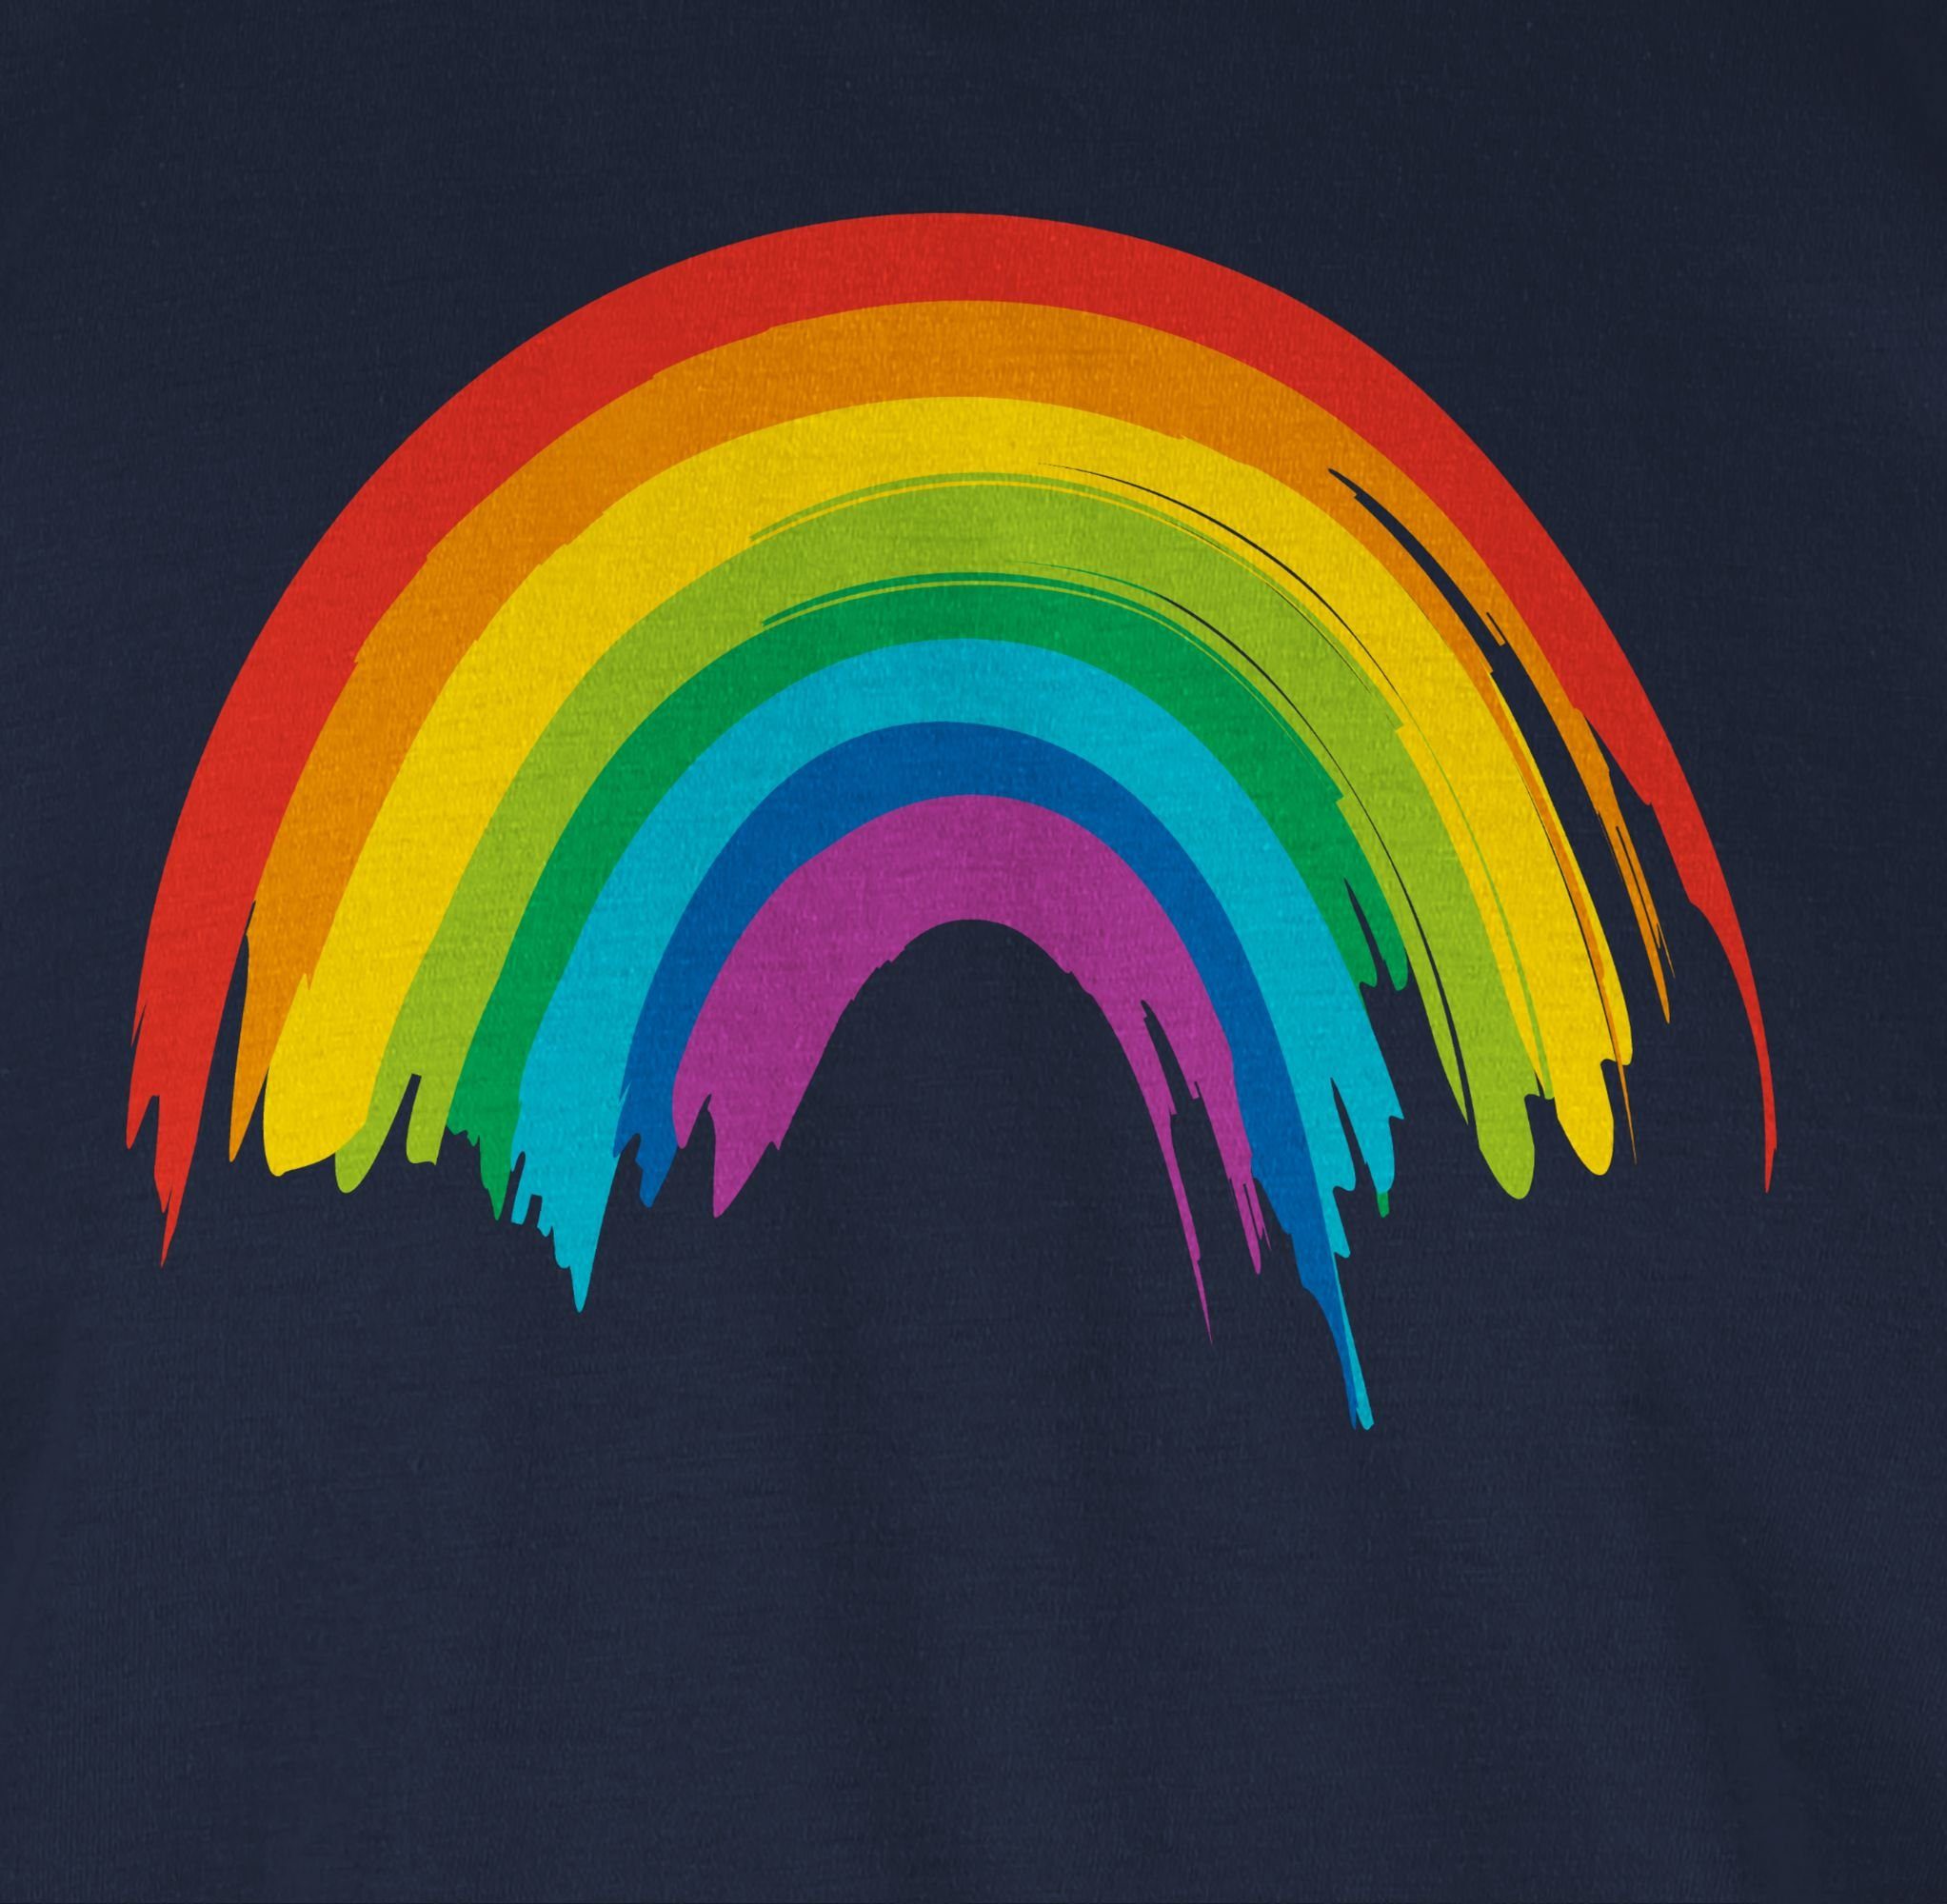 Shirtracer T-Shirt Regenbogen LGBT & Navy 2 LGBT LGBTQ Kleidung Blau